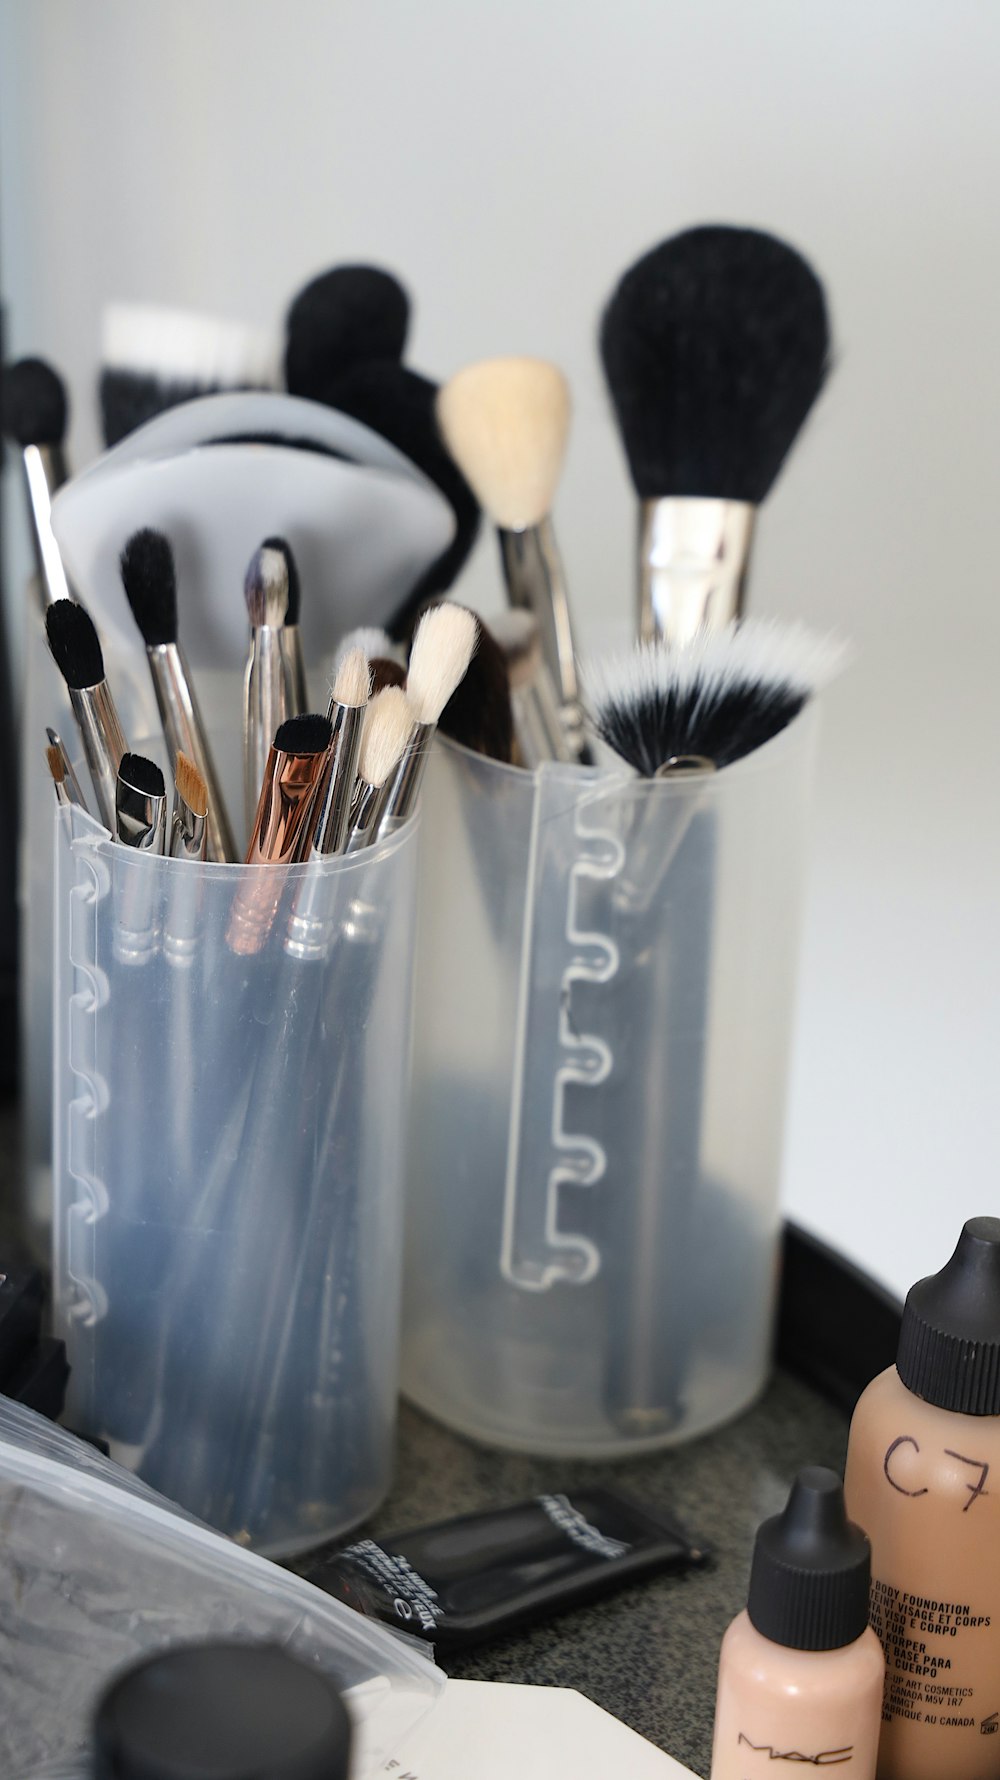 make-up brushes on white plastic organizers